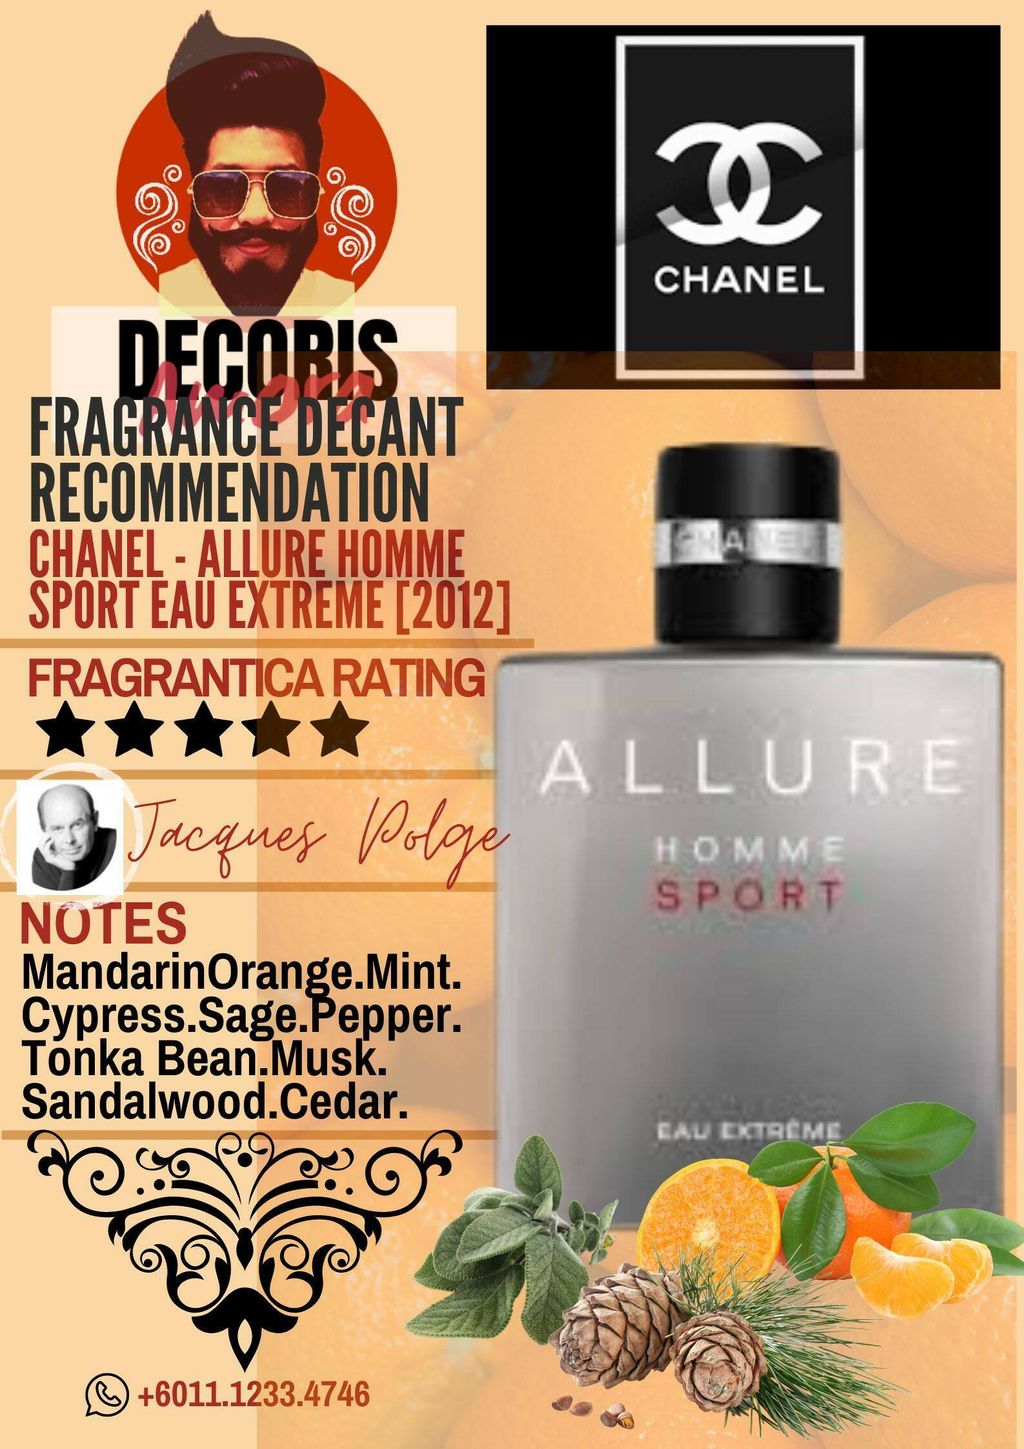 Chanel Allure Homme Sport Eau Extreme - Perfume Decant – Decoris Amora  Perfume Decant